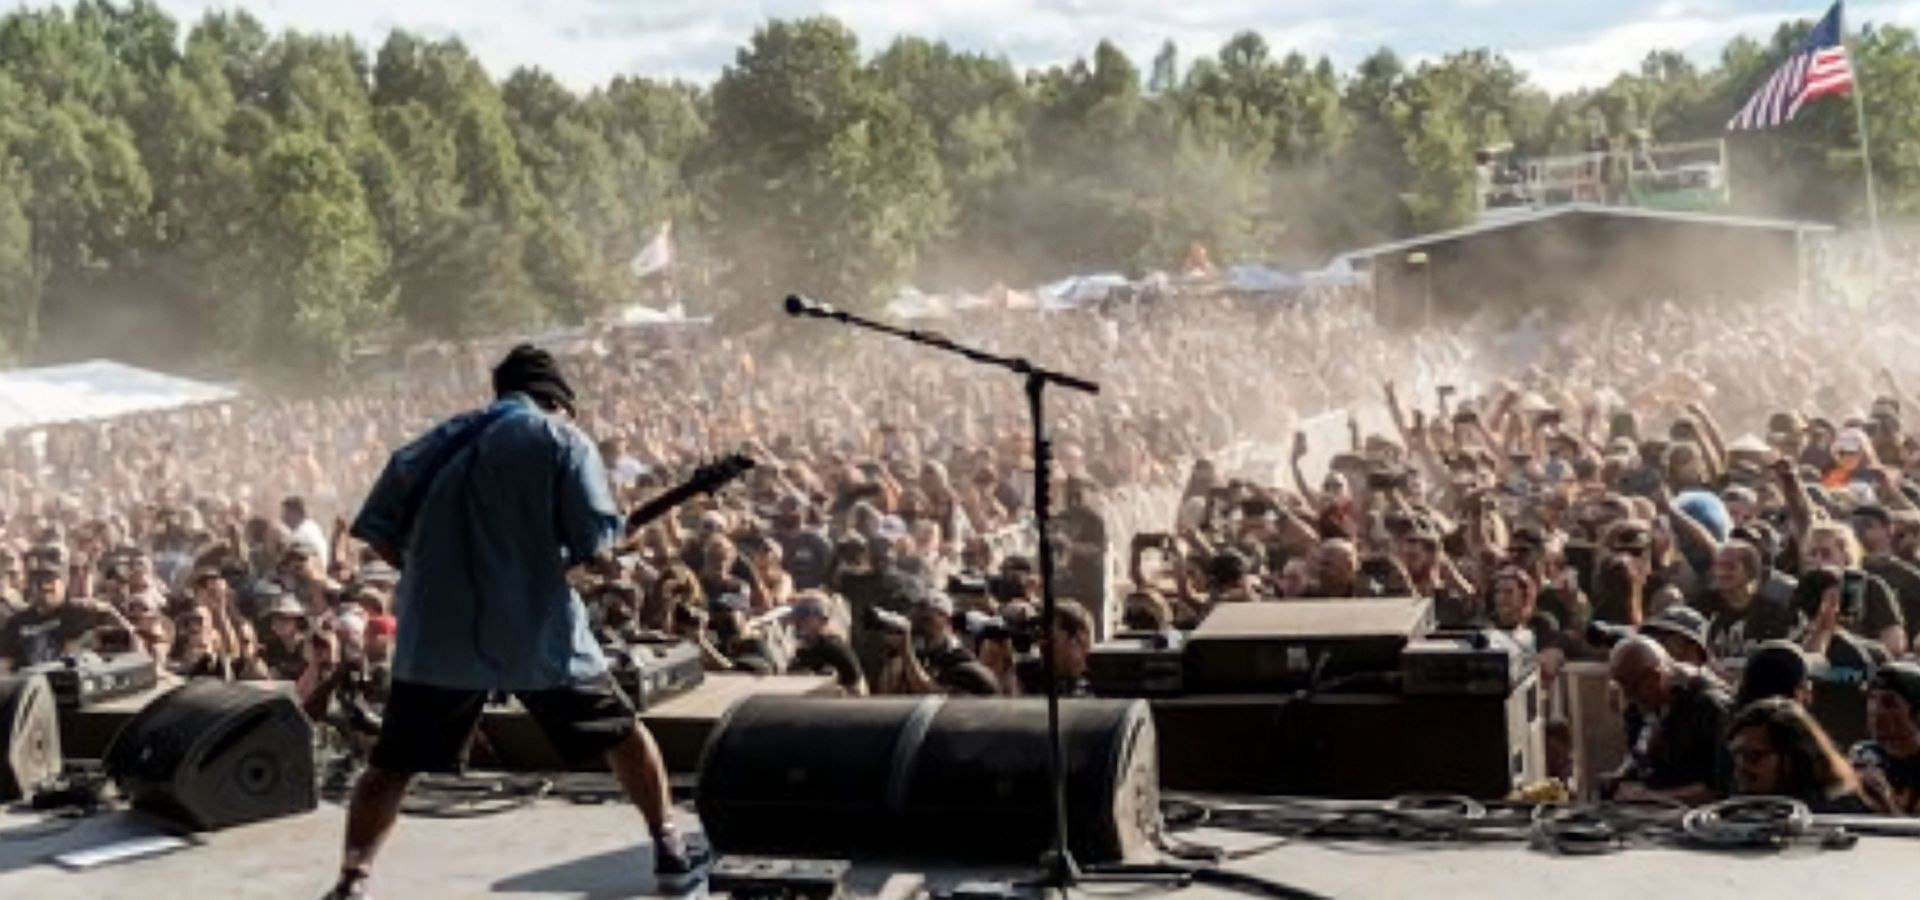 Blue Ridge Rock Festival 2023 Lineup, tickets, dates, venue and more